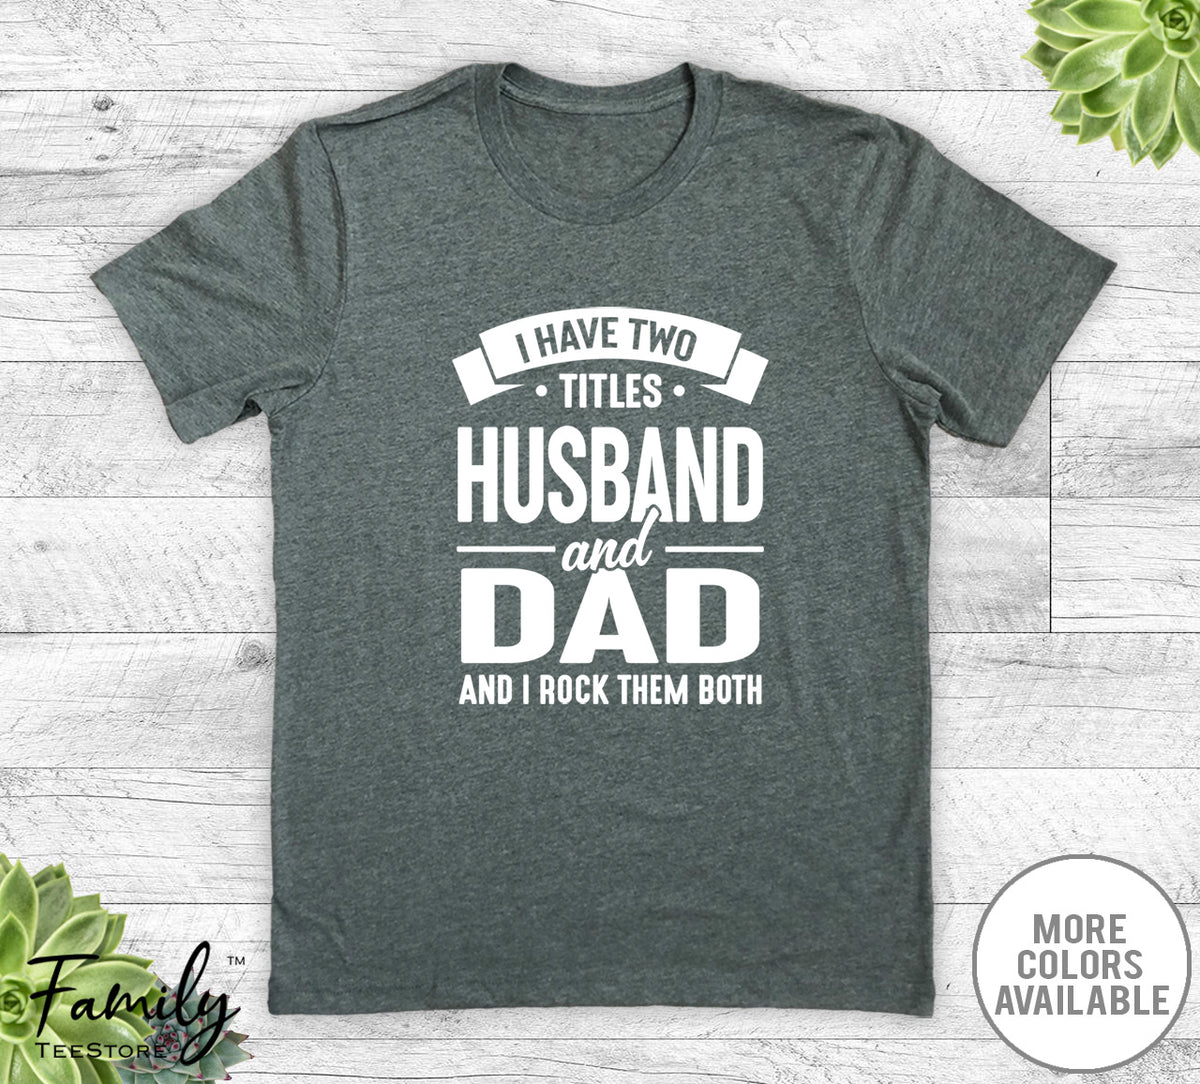 I Have Two Titles Husband And Dad - Unisex T-shirt - Husband Shirt - Funny Husband Gift - familyteeprints